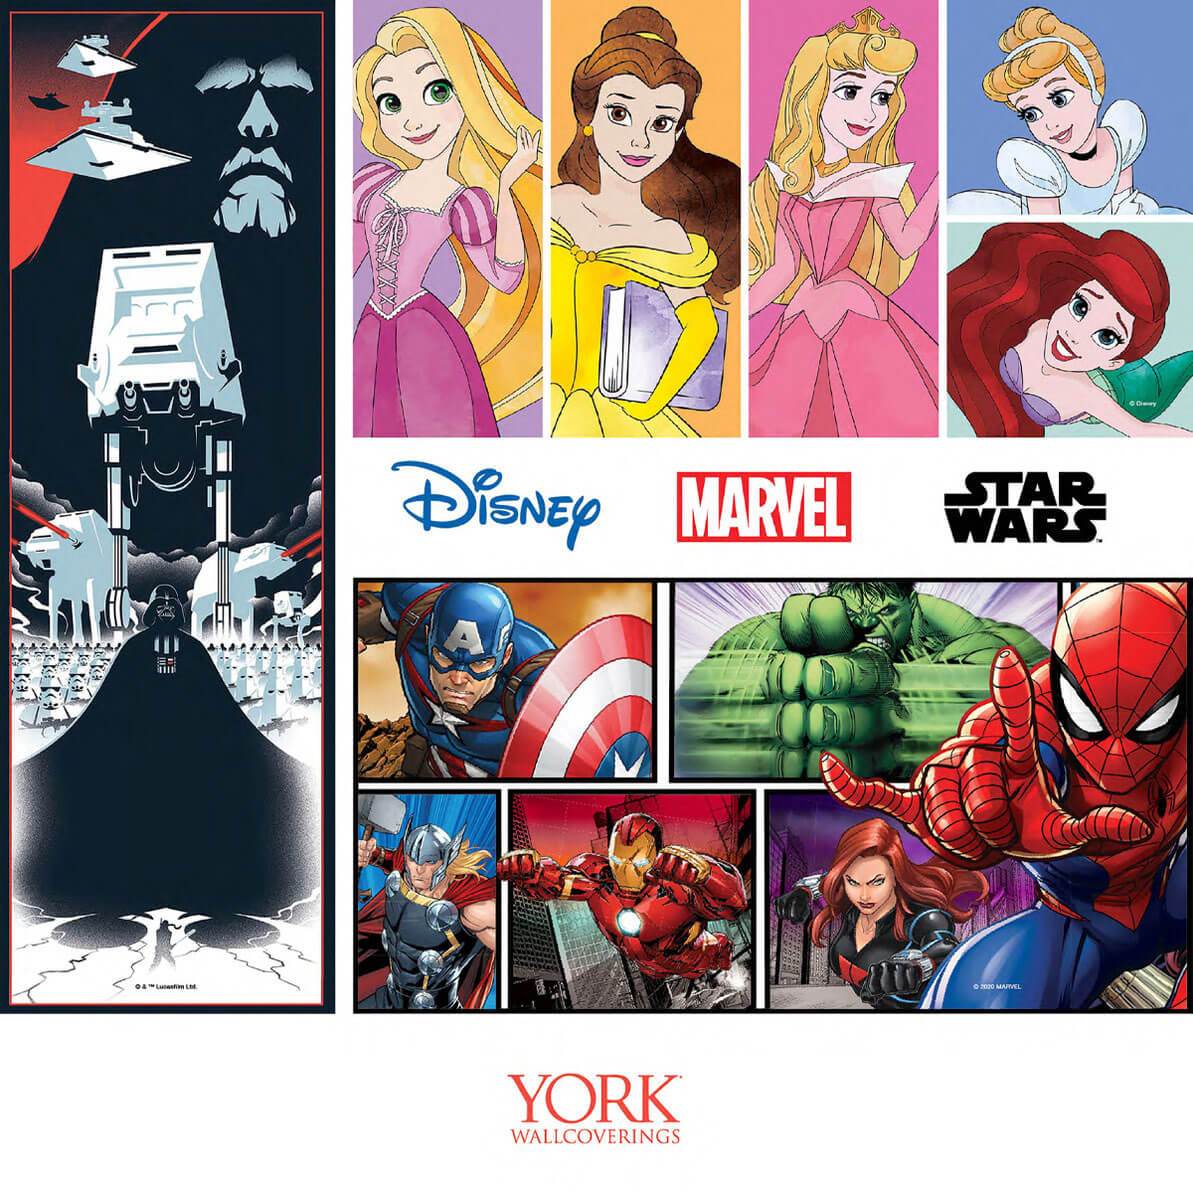 Disney Kids Vol. 4 Princess Perfect Scroll Wallpaper - White/Glitter